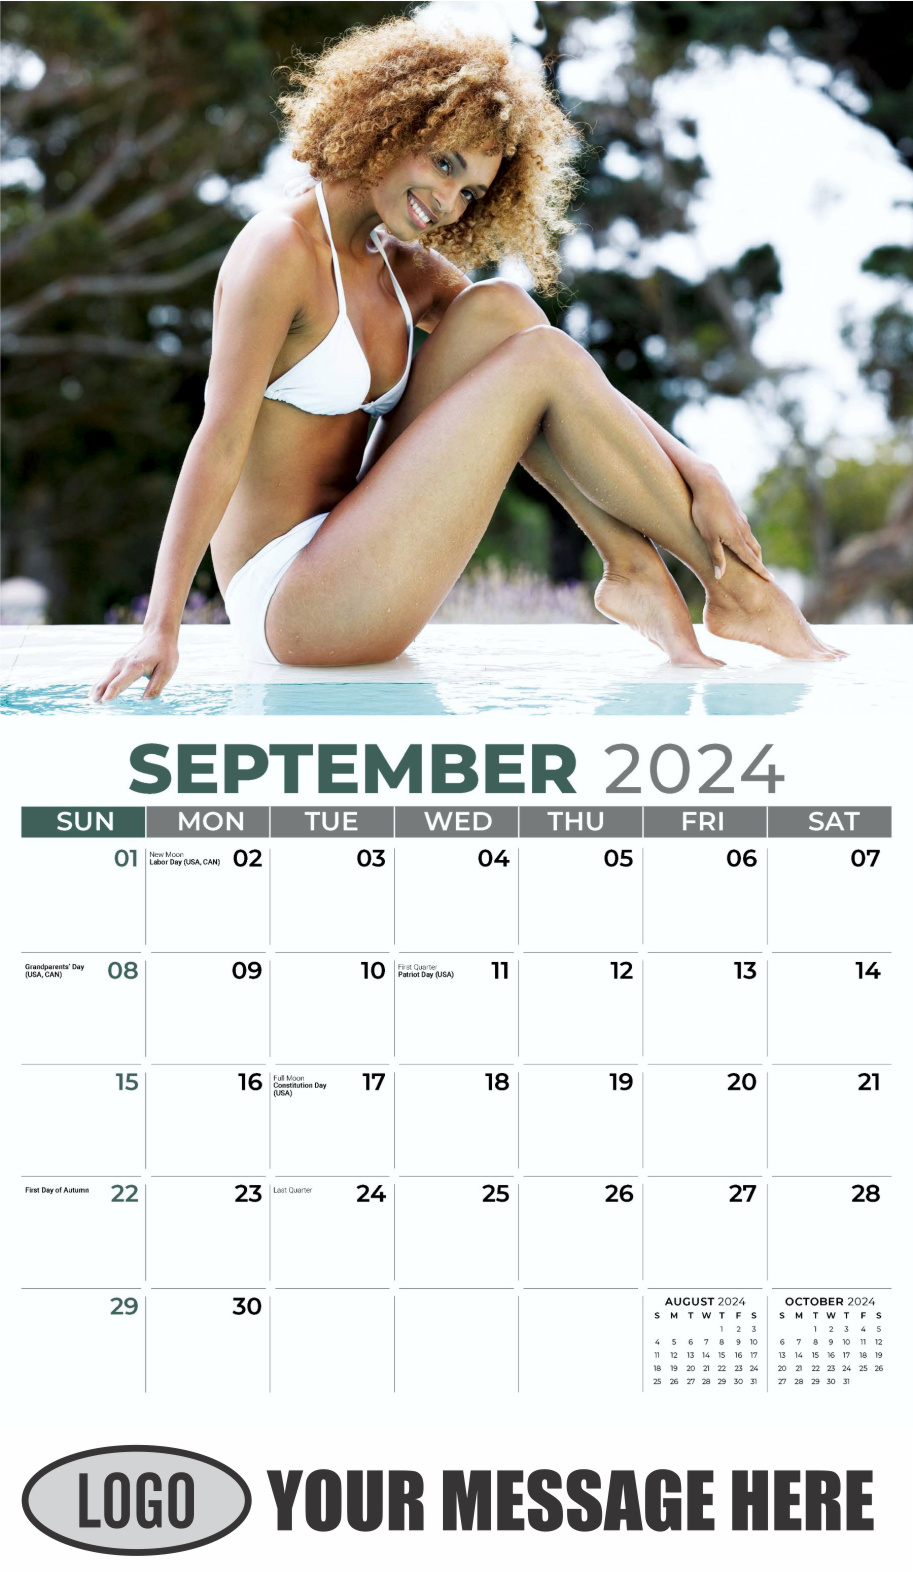 Swimsuits 2024 Business Promotional Wall Calendar - September